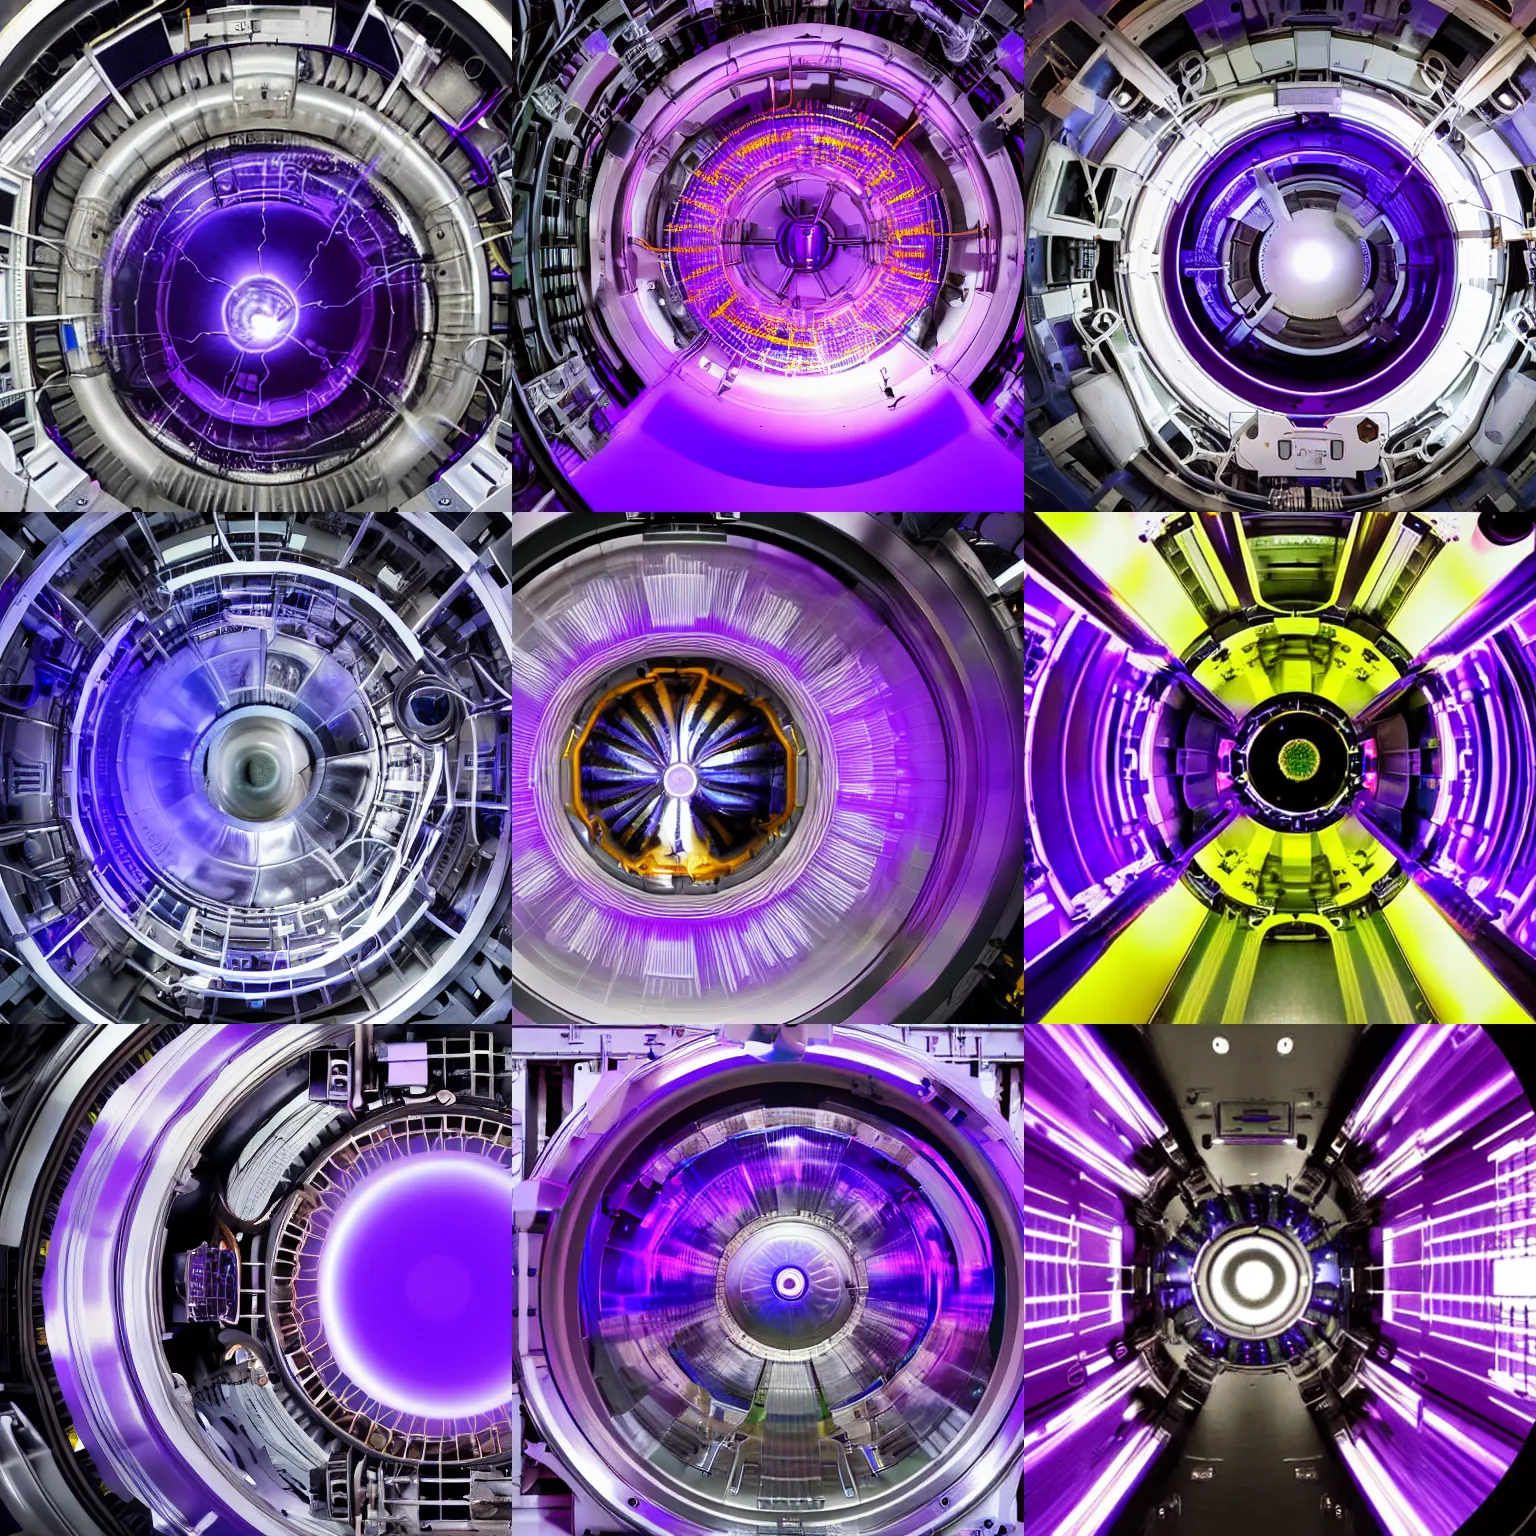 Prompt: inside of fusion reactor chamber, purple plasma